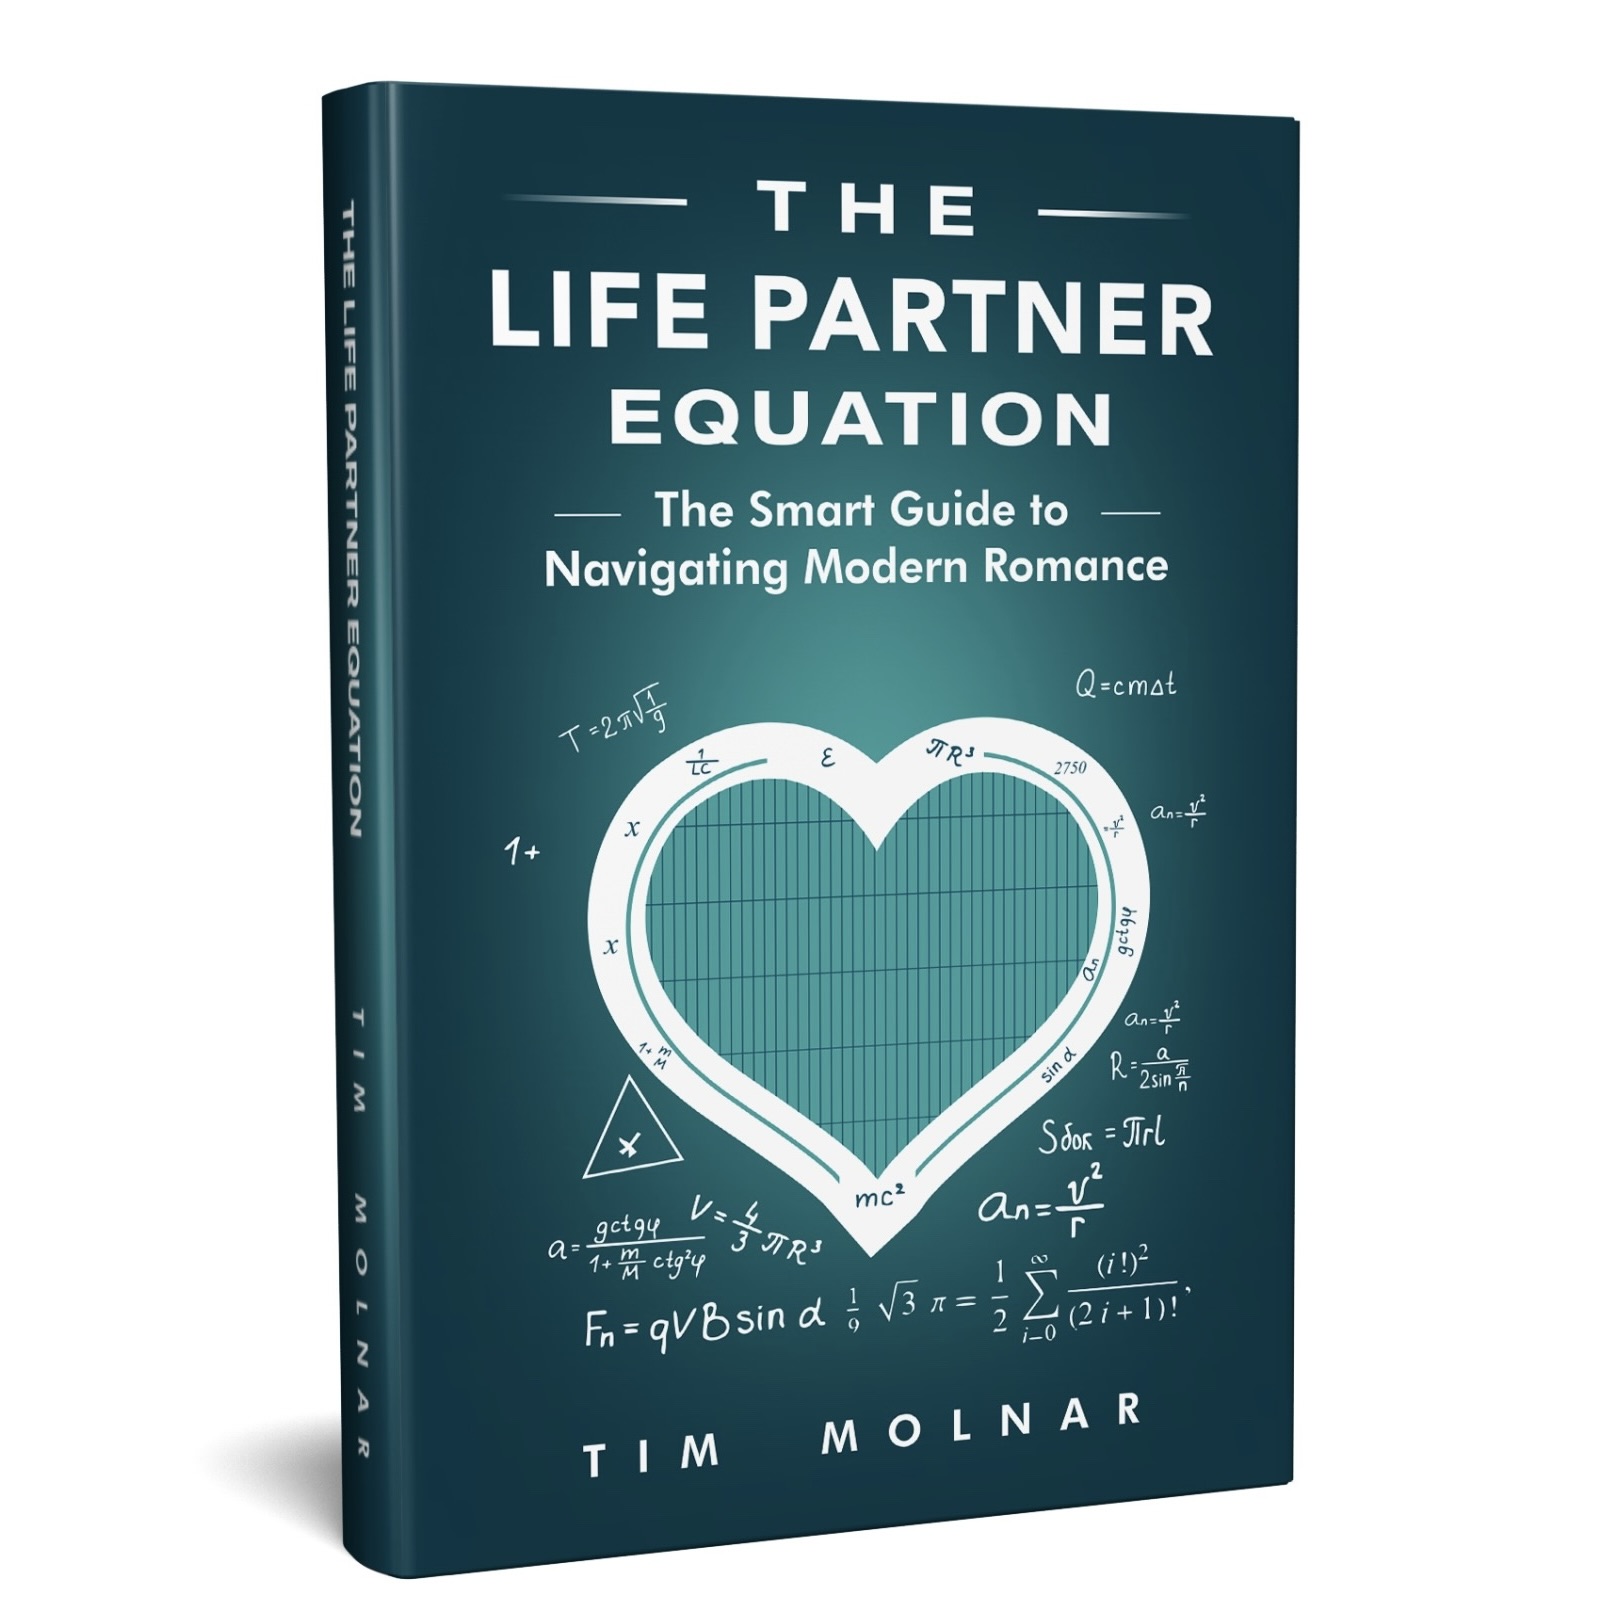 The Life Partner Equation